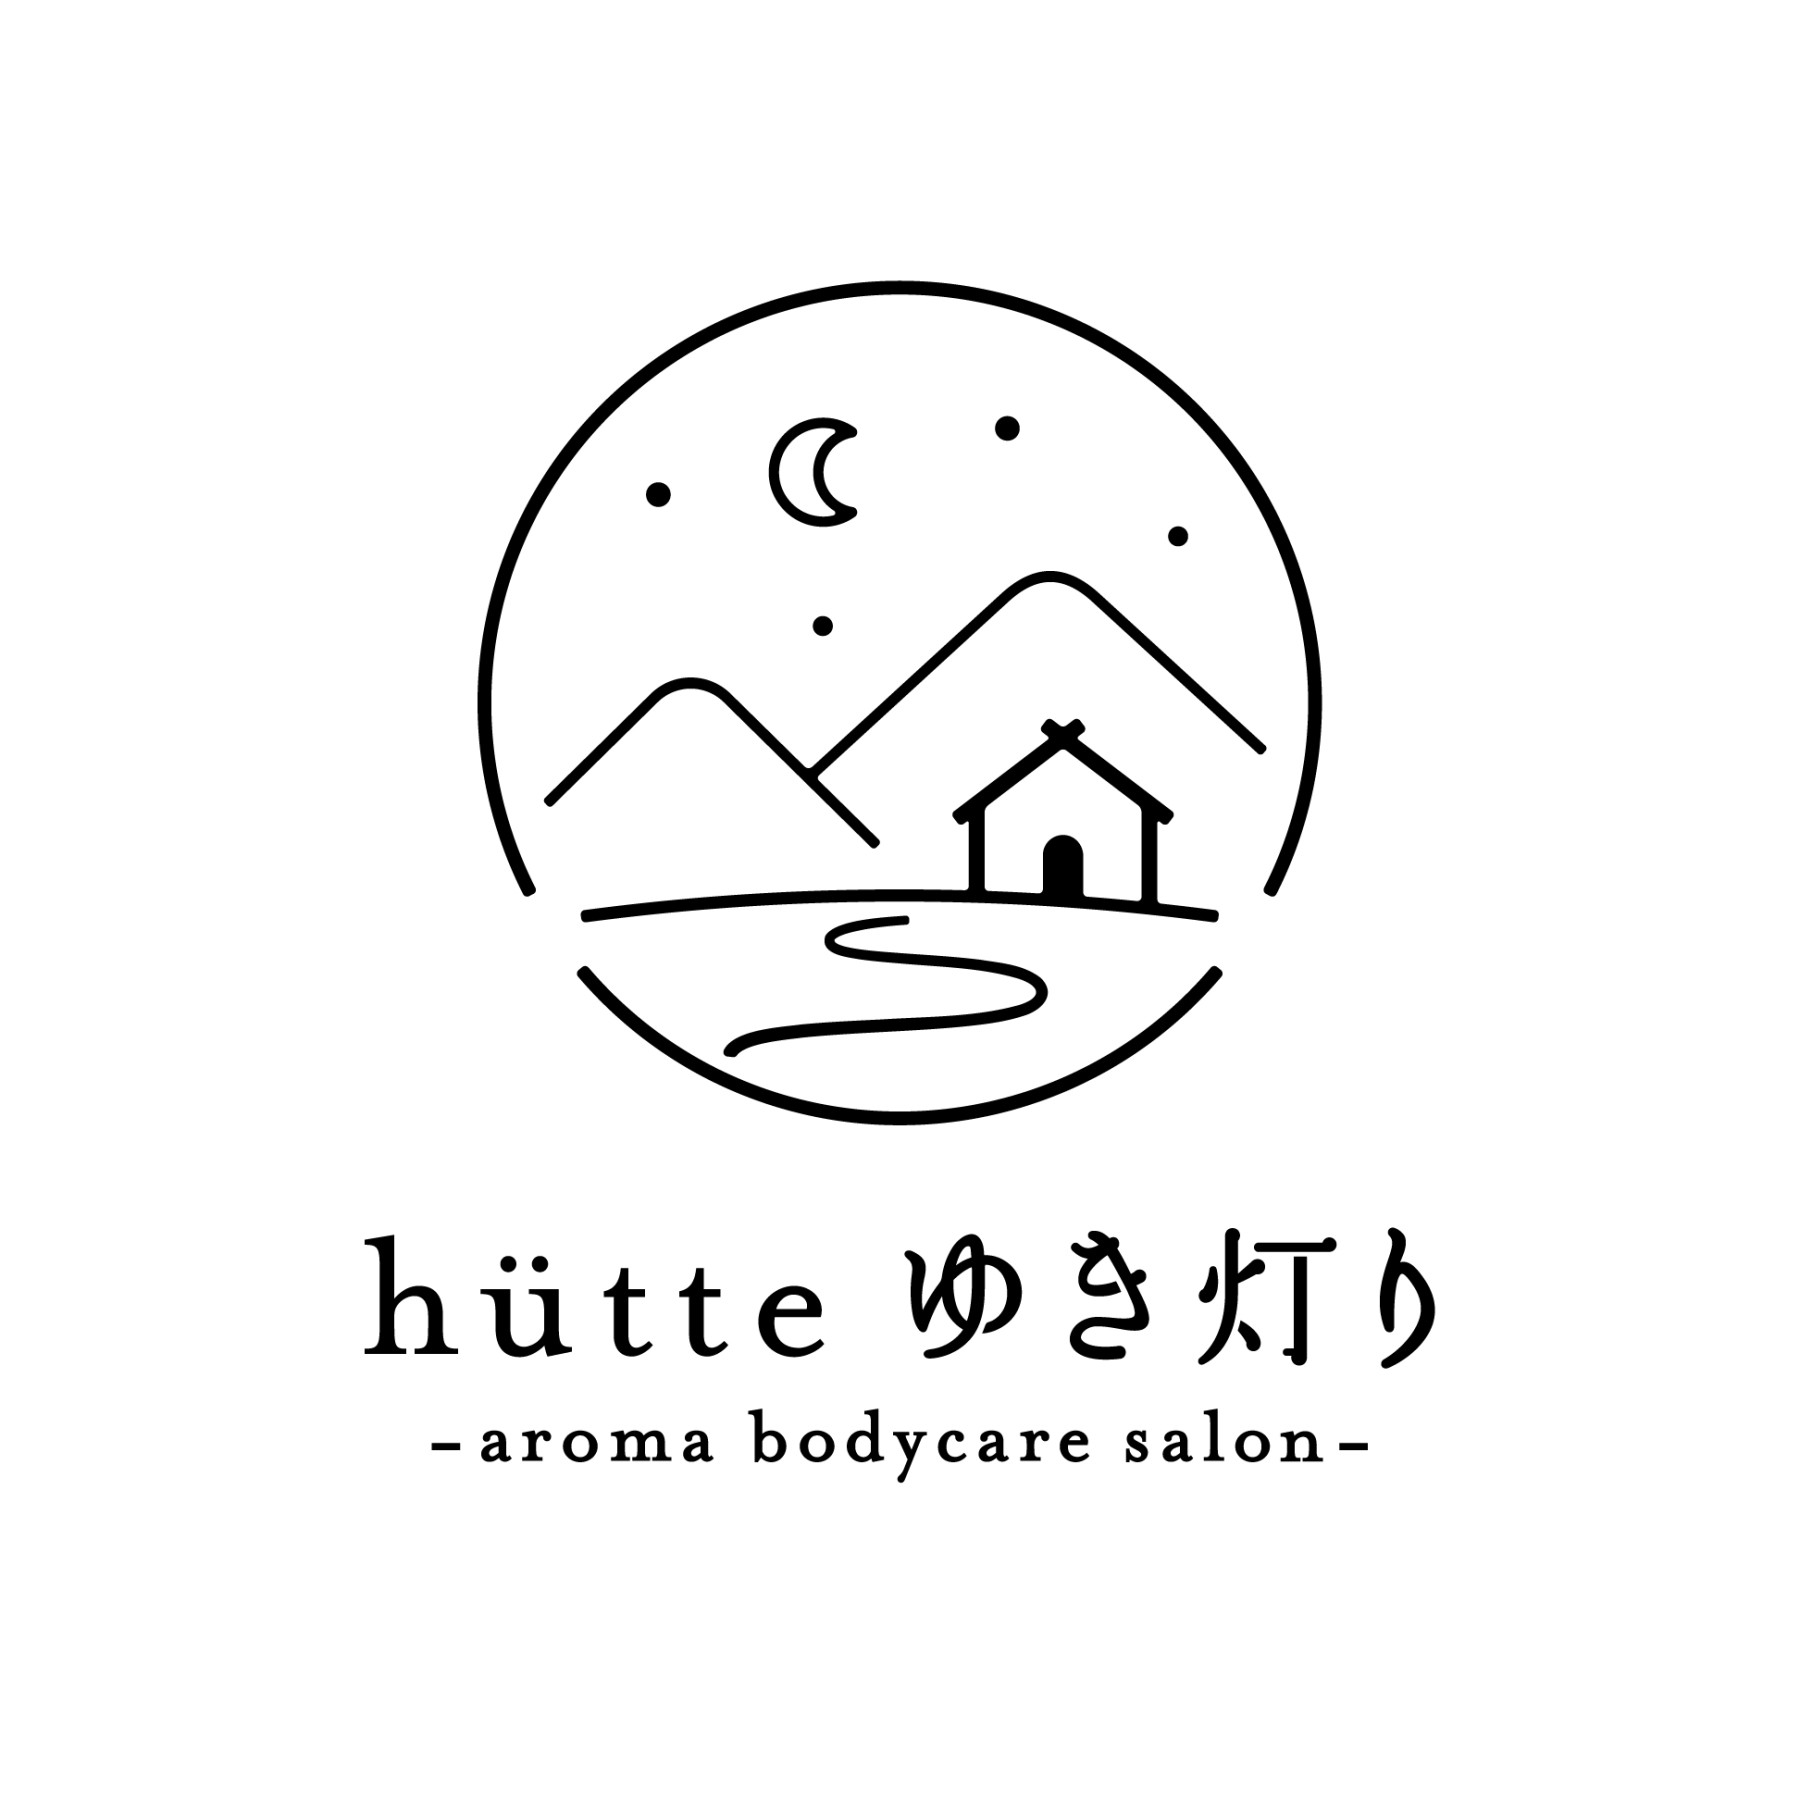 hütteゆき灯り
‐aroma bodycare salon-